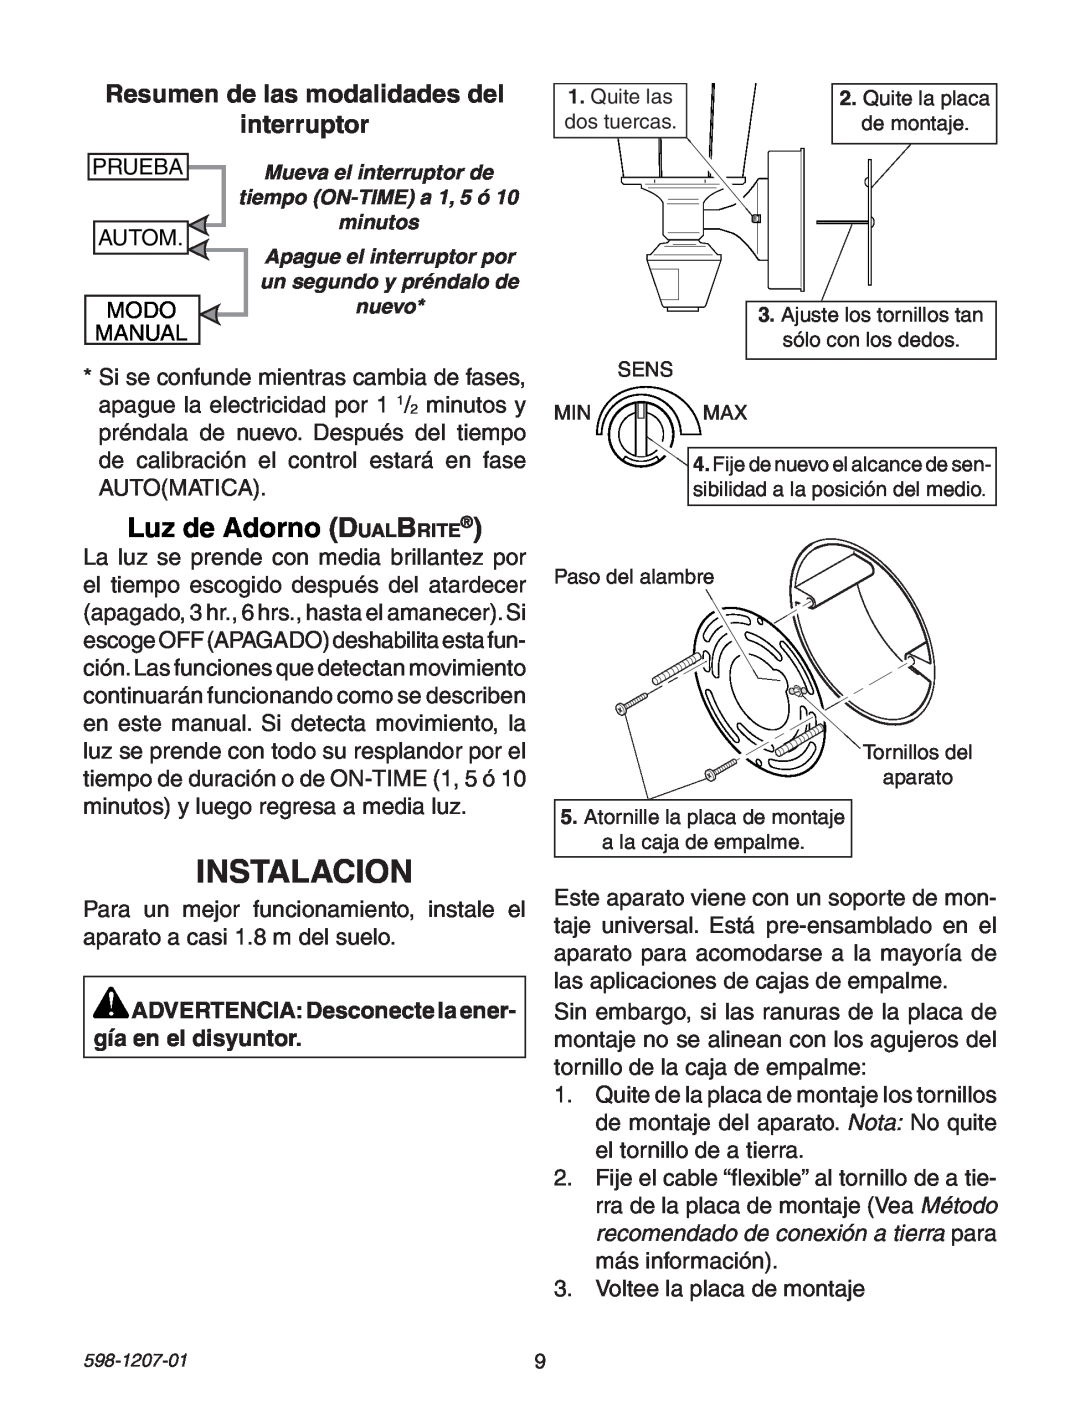 Heath Zenith Motion Sensing Coach Lights manual Instalacion, Luz de Adorno DualBrite, Modo 